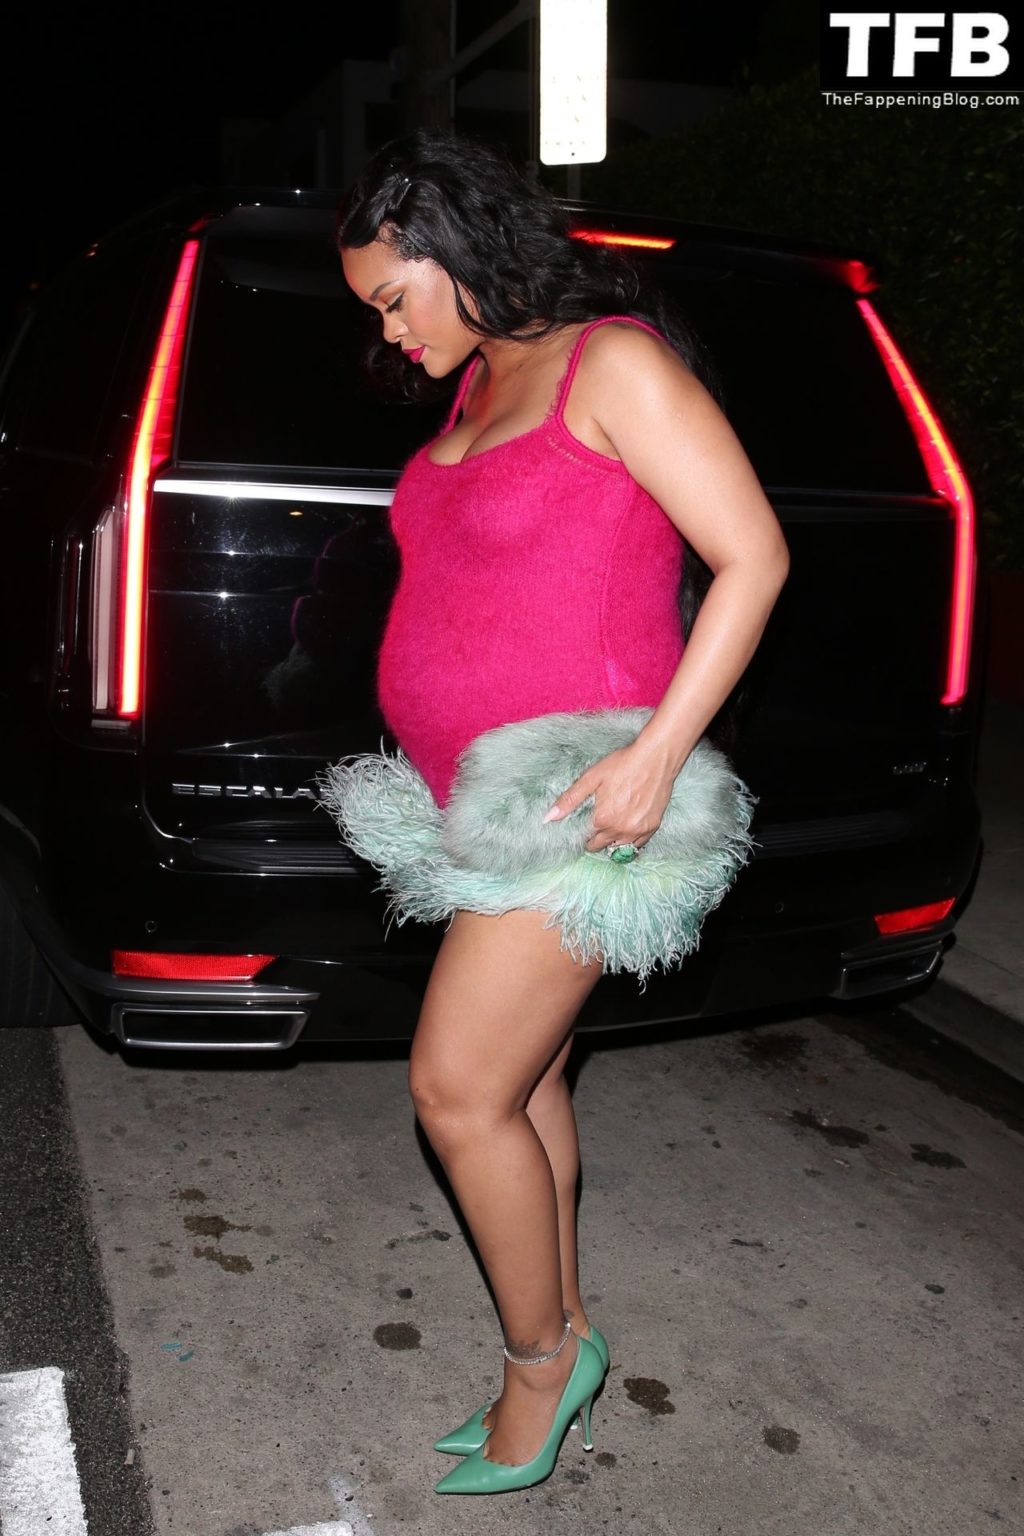 Rihanna Sexy The Fappening Blog 97 1024x1536 - Rihanna Puts Her Baby Bump on Display Grabbing Dinner at Giorgio Baldi (100 Photos)